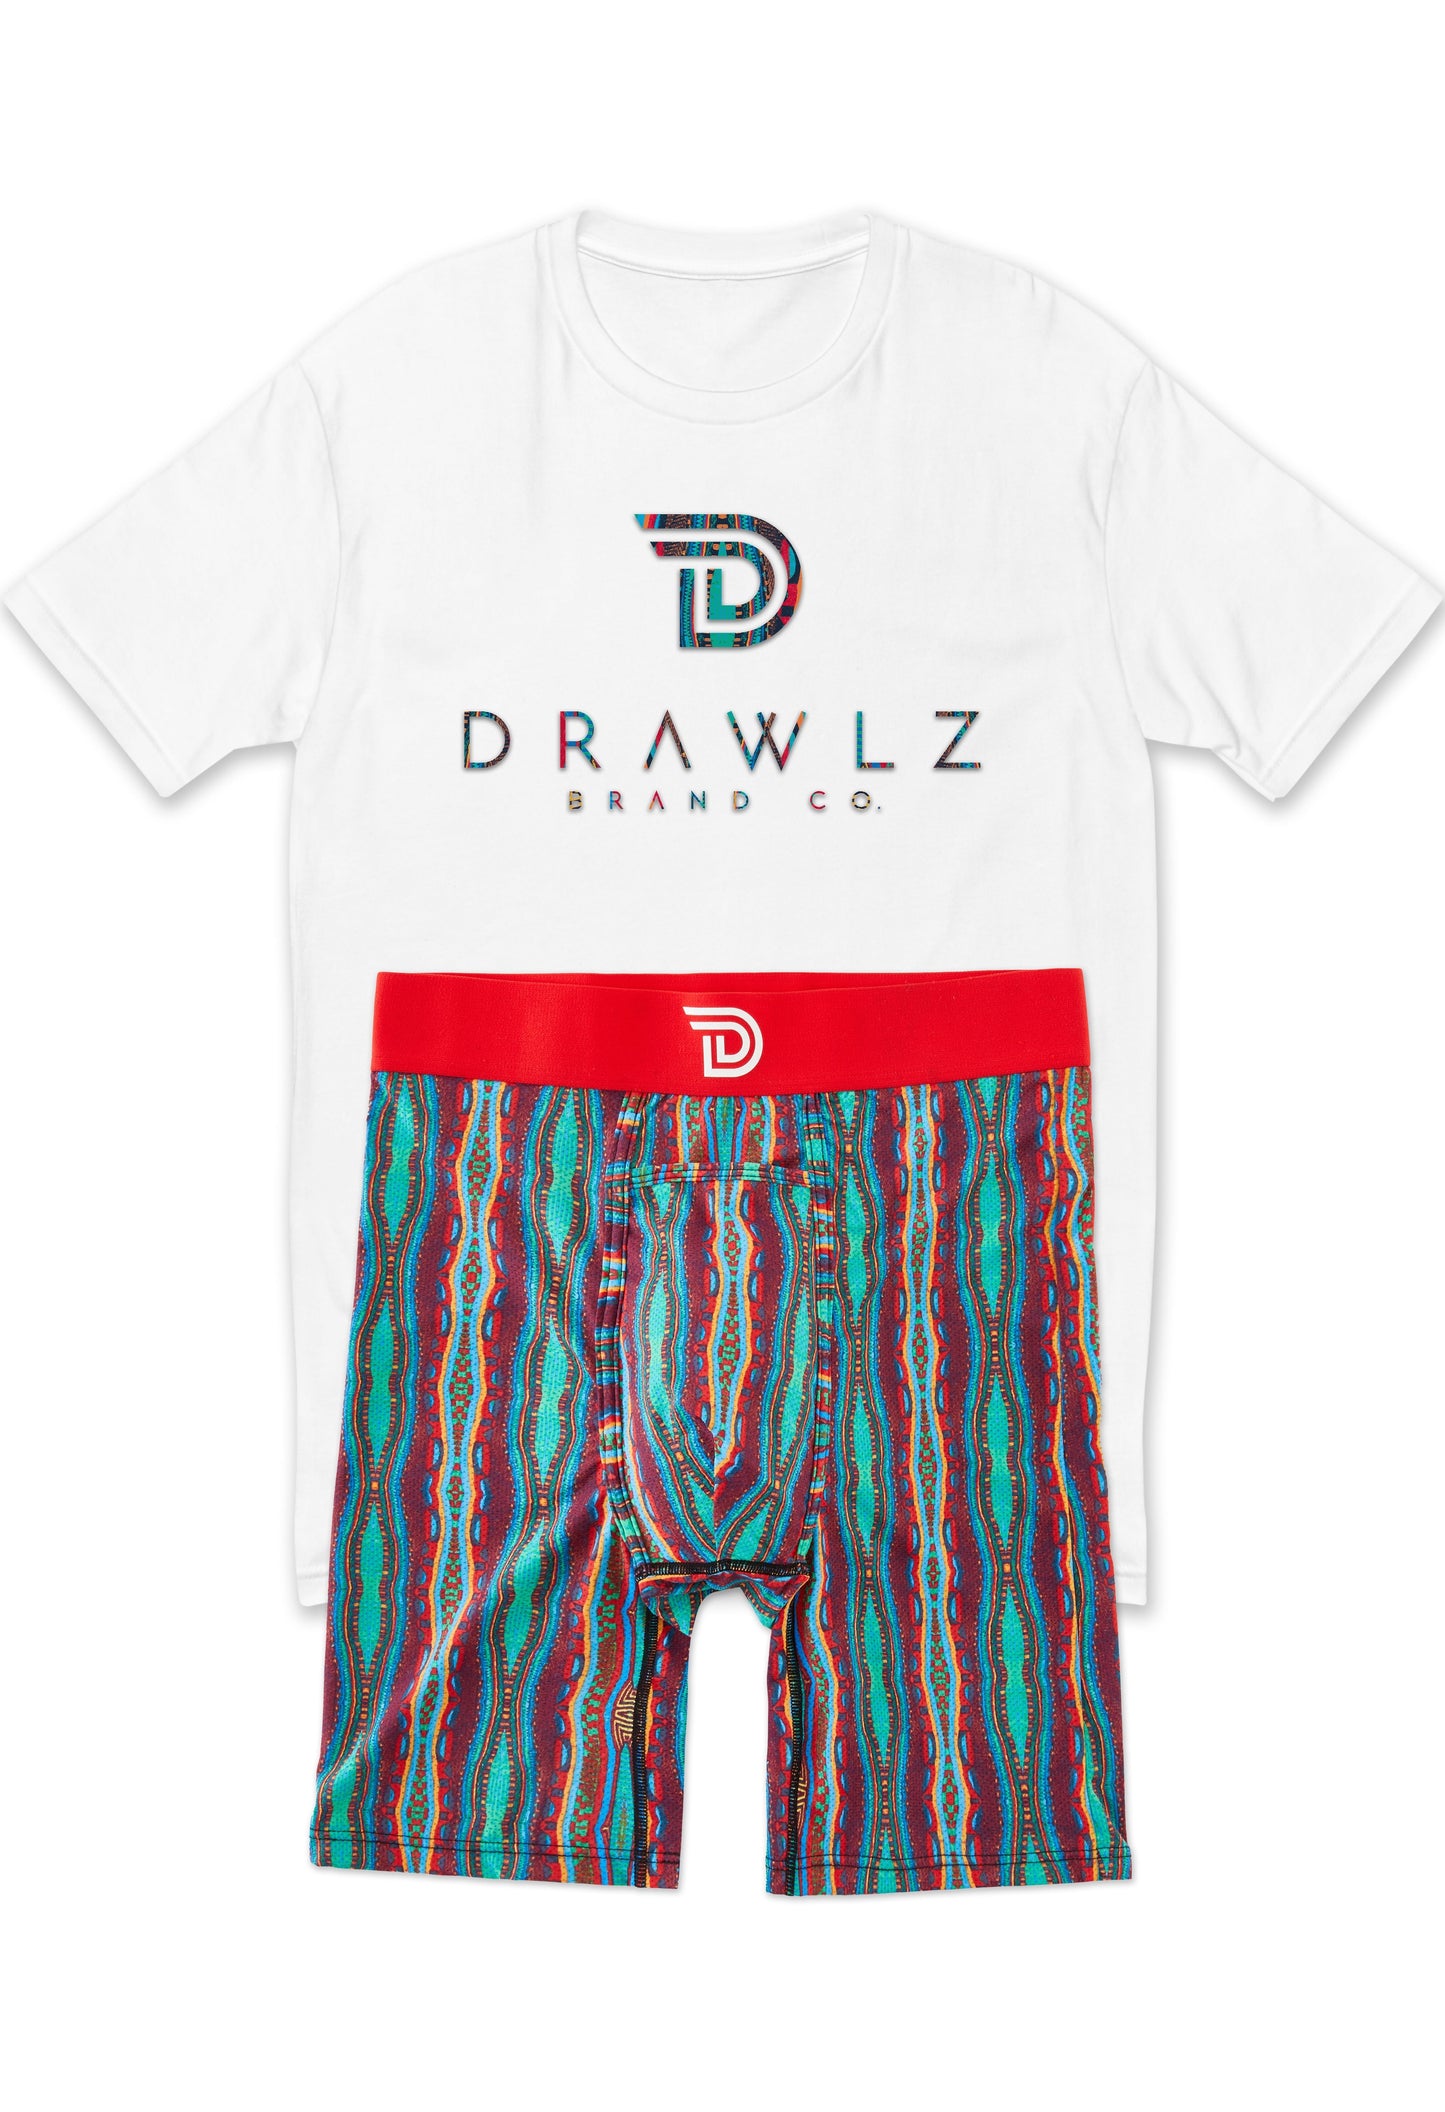 Drawlz Brand Co. , LLC Frank White Pack